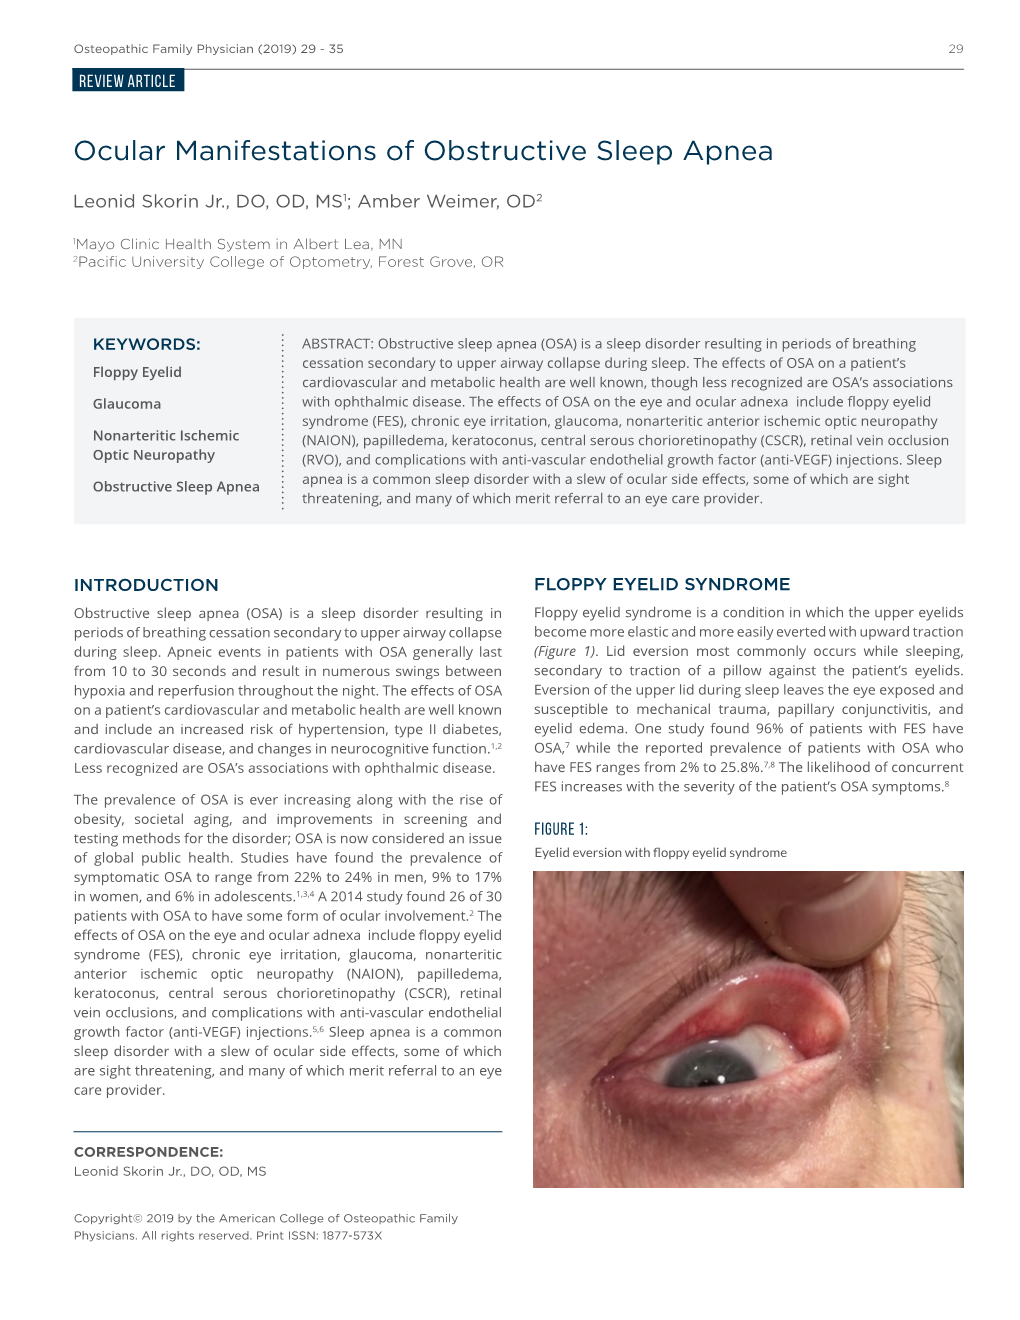 Ocular Manifestations of Obstructive Sleep Apnea Patients with Cirrhosis